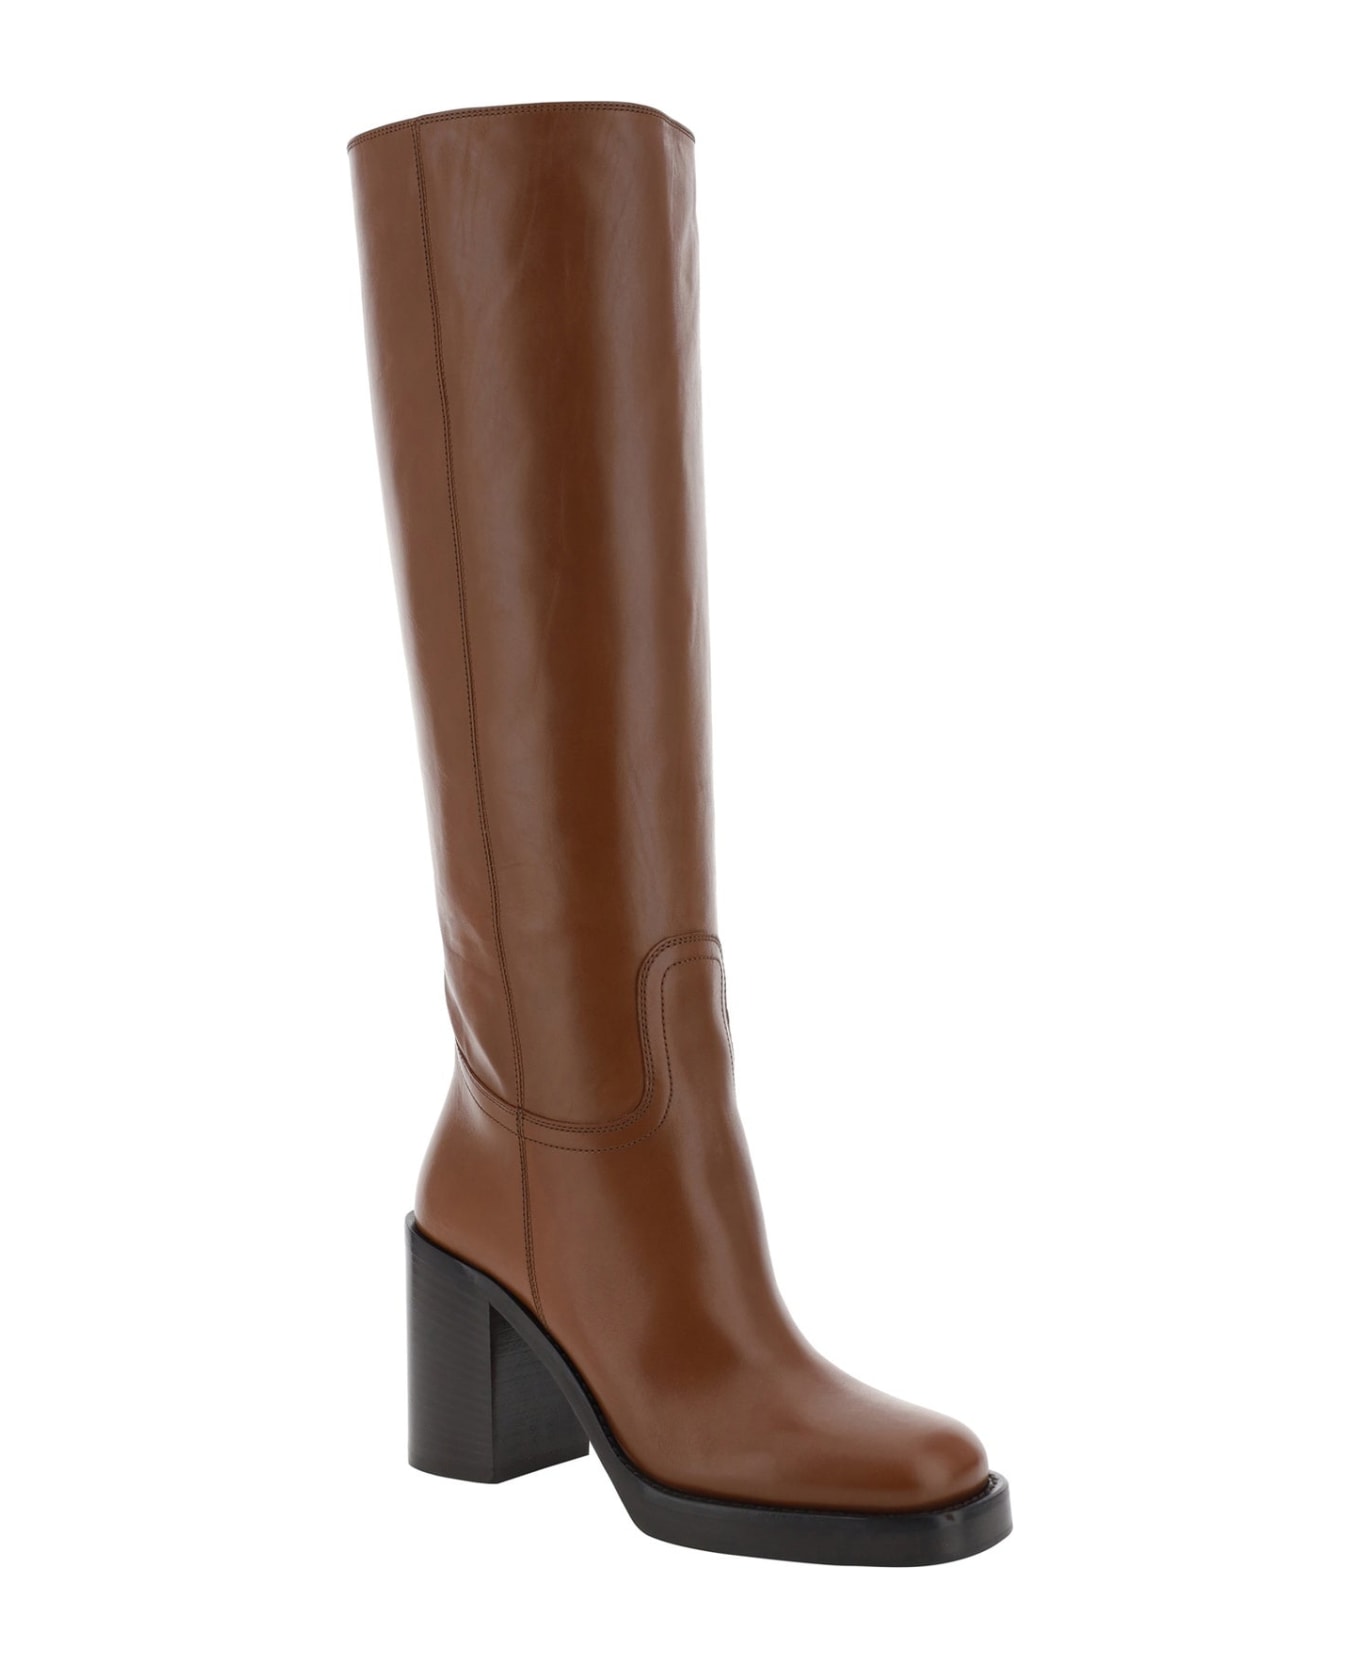 Prada Leather Boots - Brown ブーツ